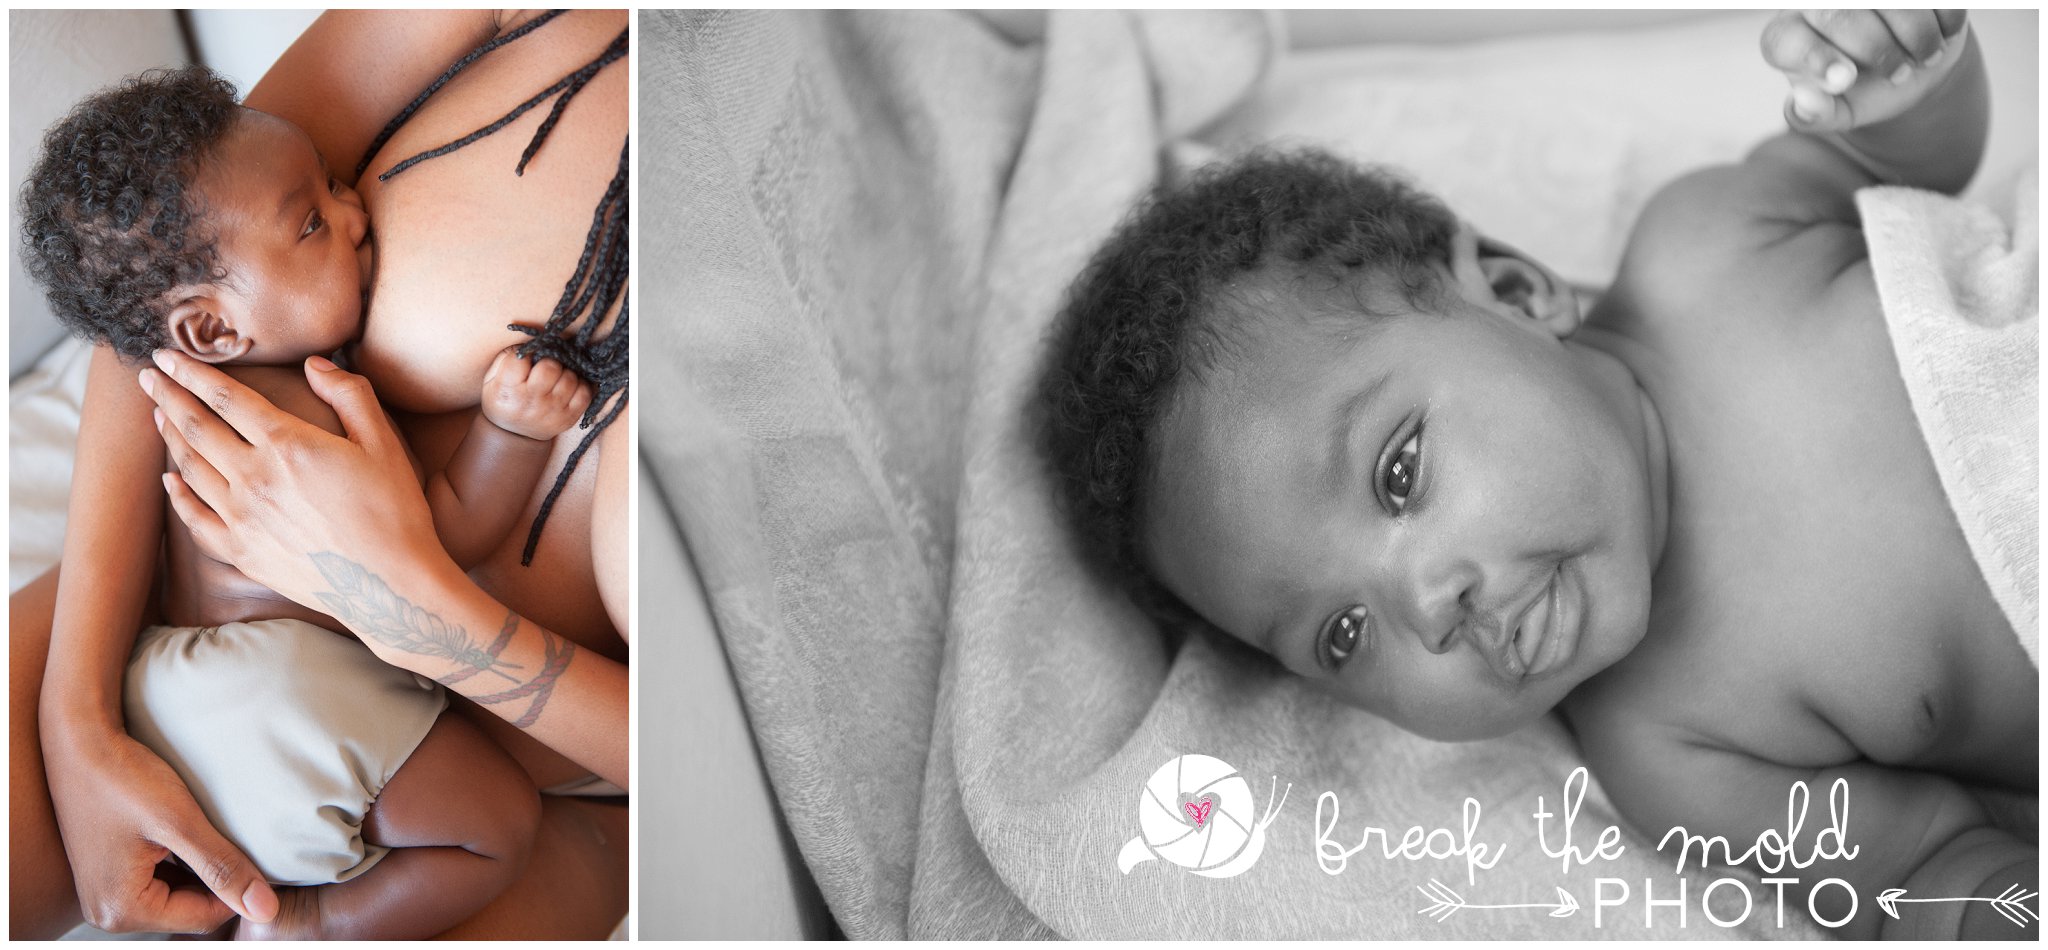 break-the-mold-photo-nursing-body-love-baby-pregnant-women-powerful-breastfeeding-sessions_7218.jpg